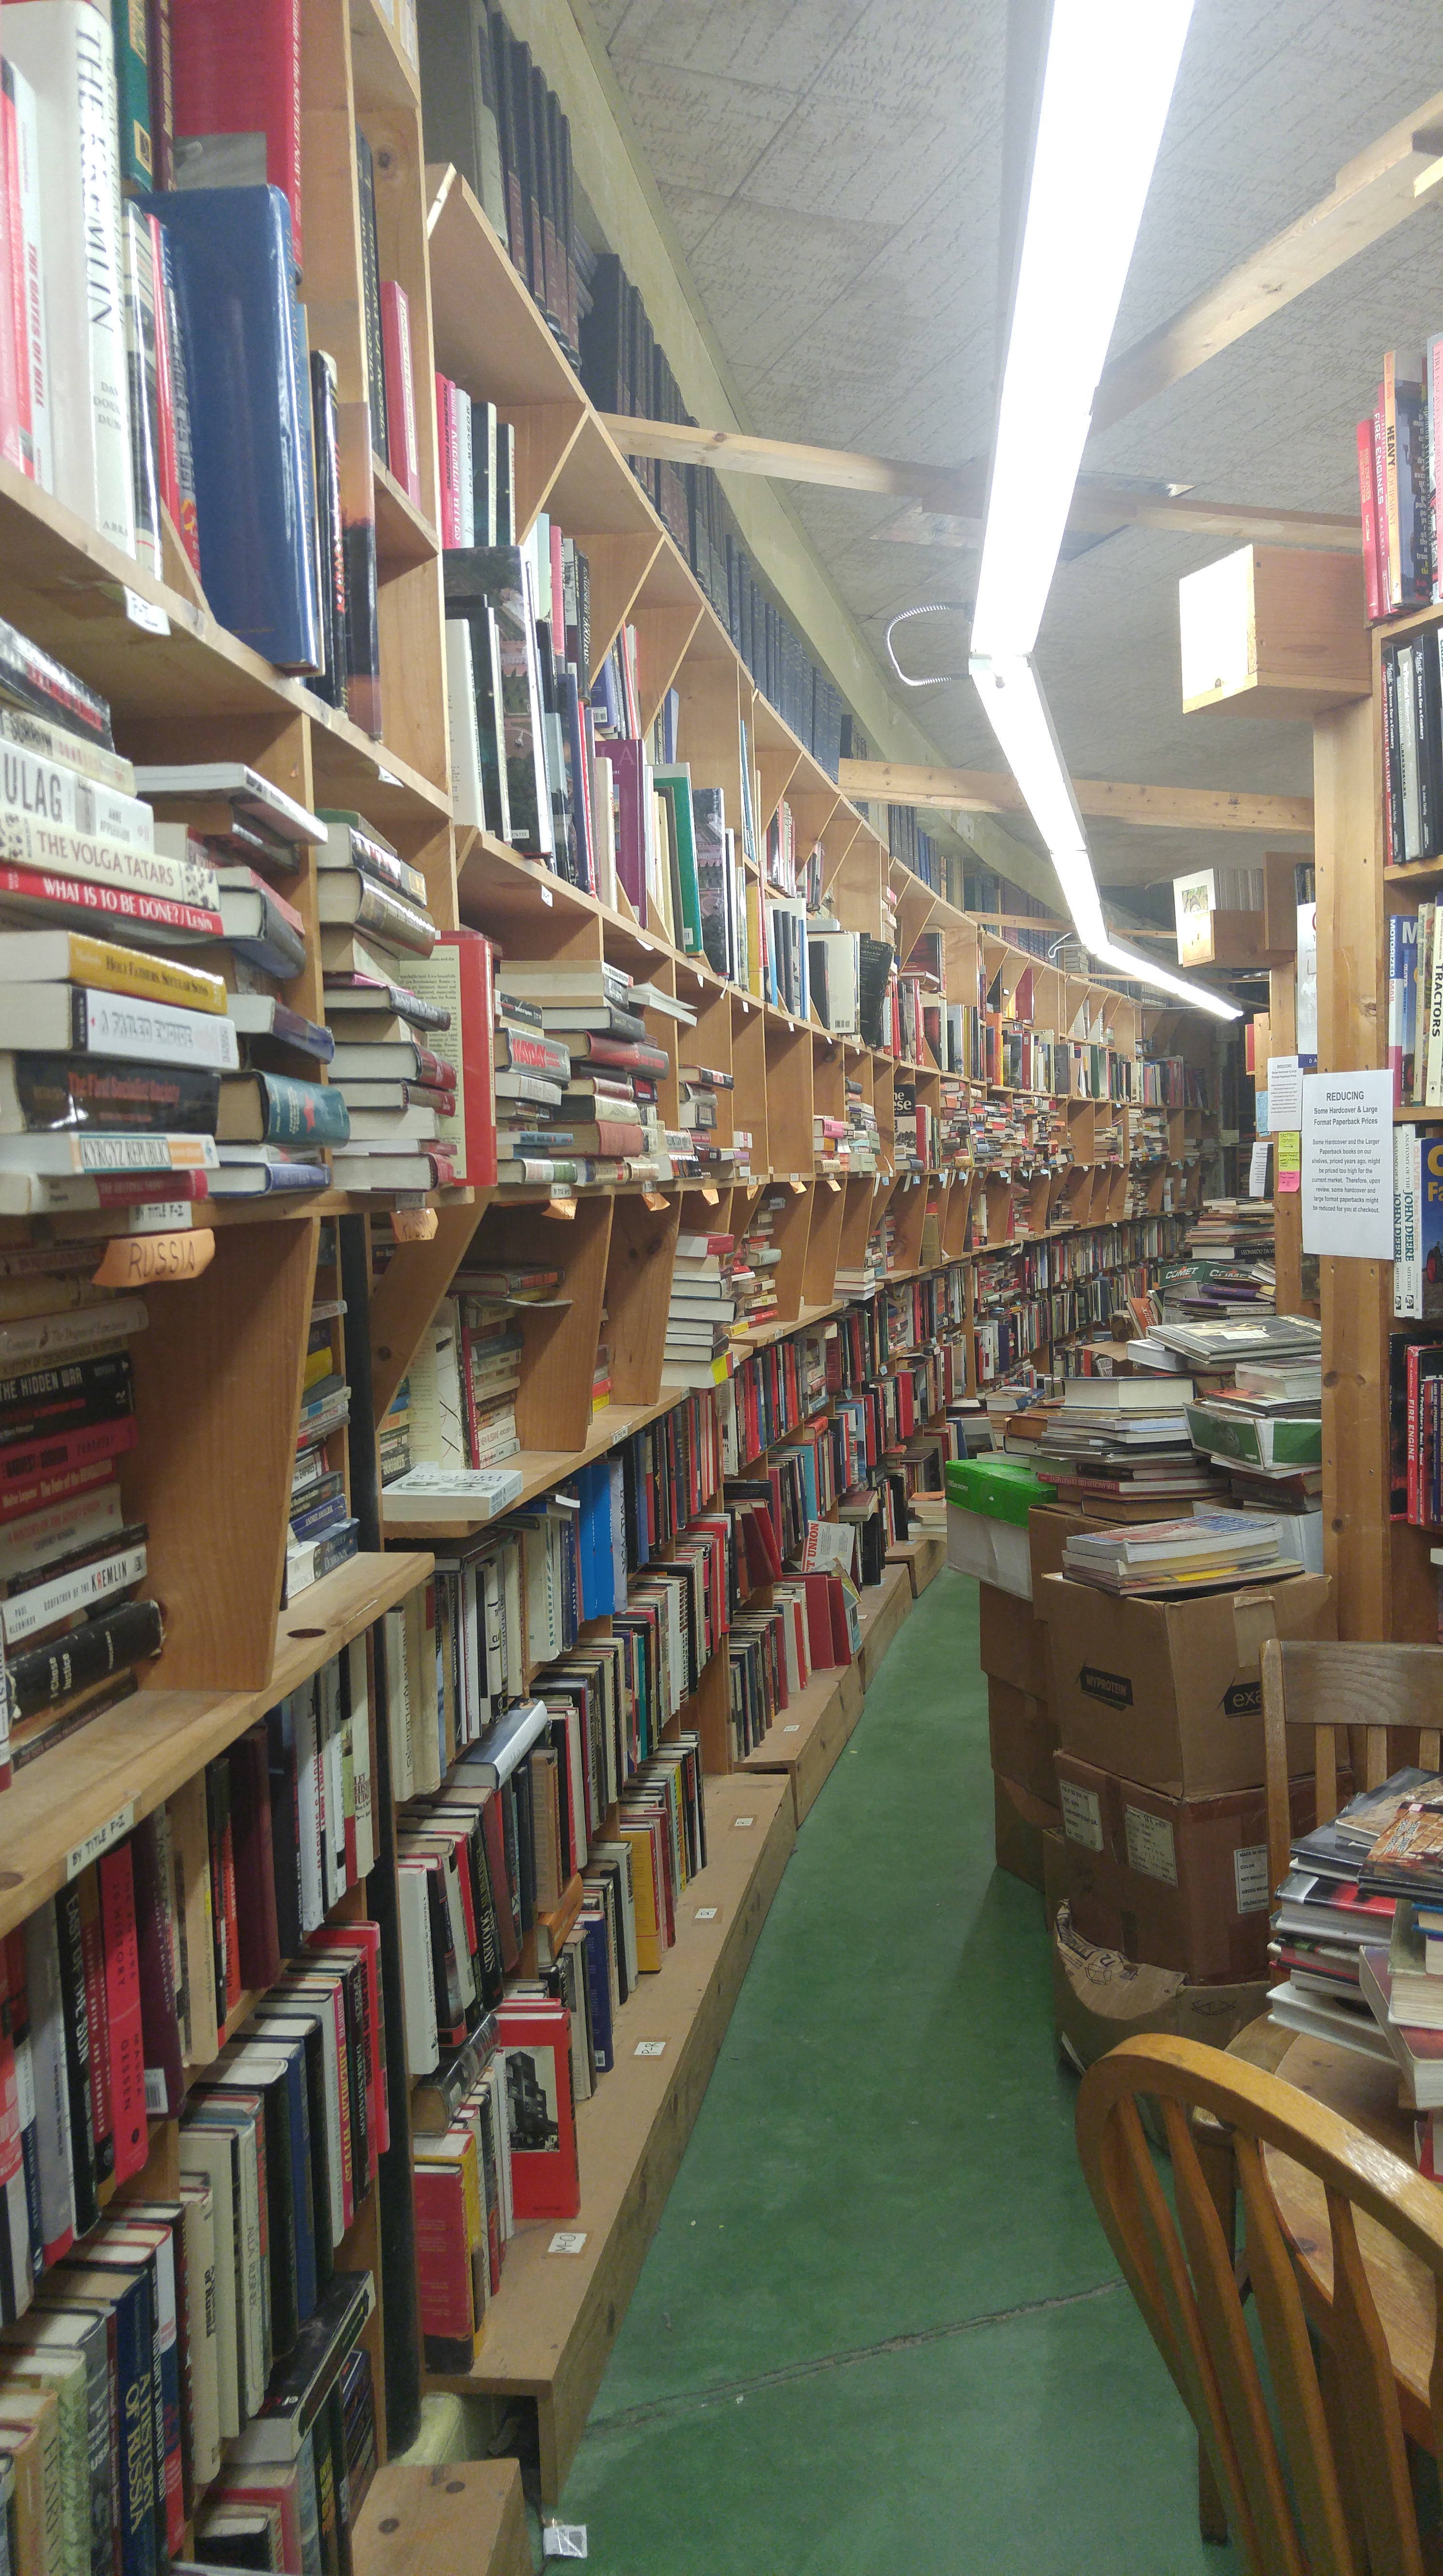 A long view of a book shelf in a bookstore